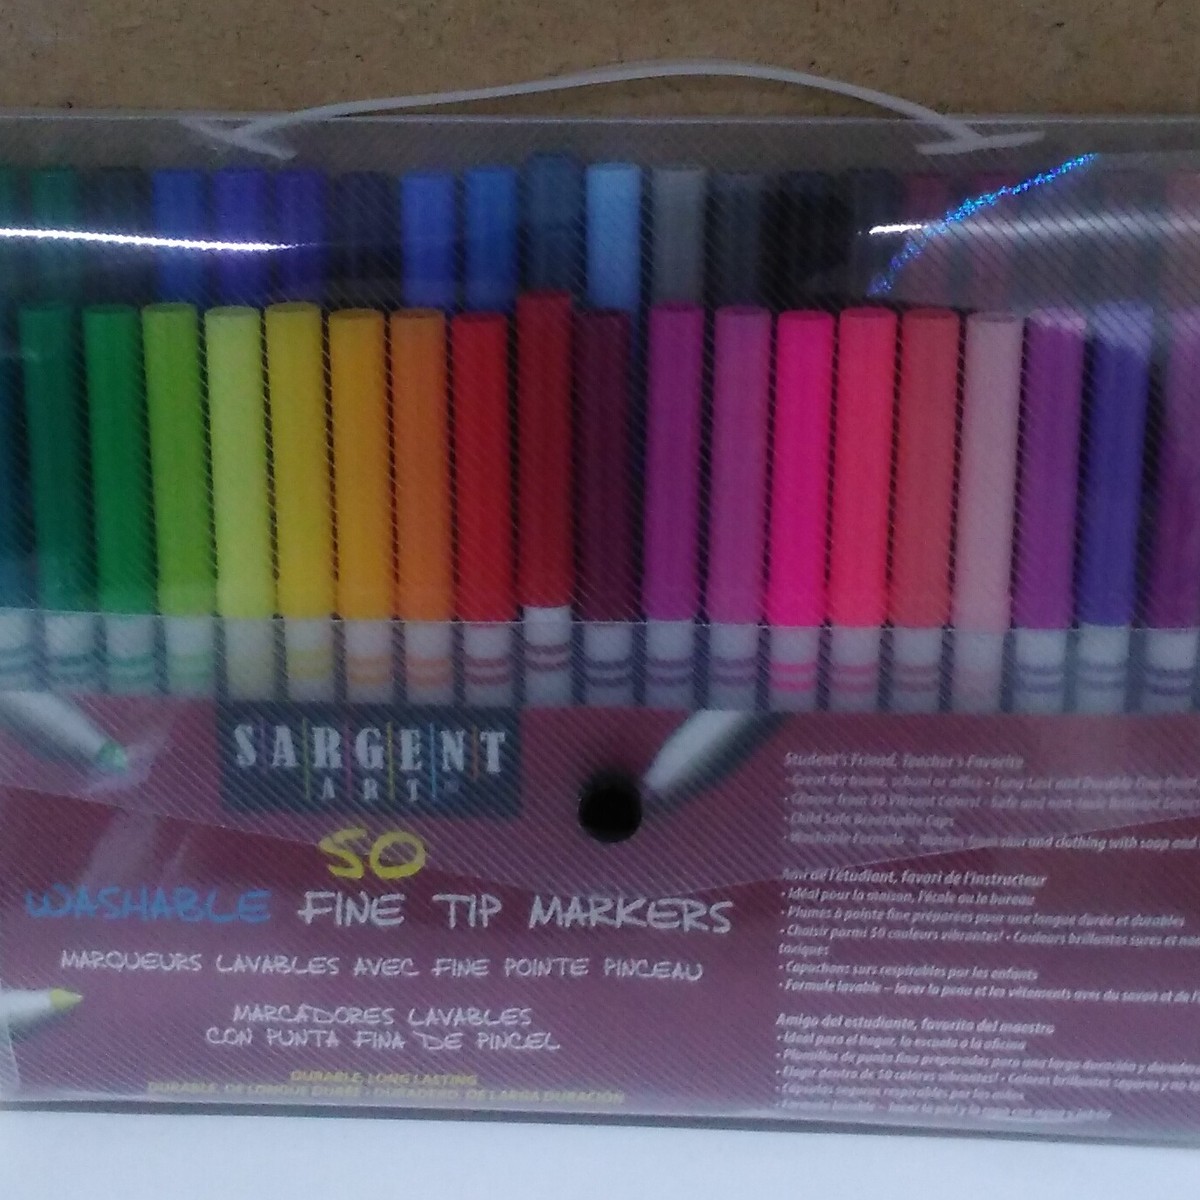 Colored Pencils 12 Pack (Sargent Art) - Stuff2Color